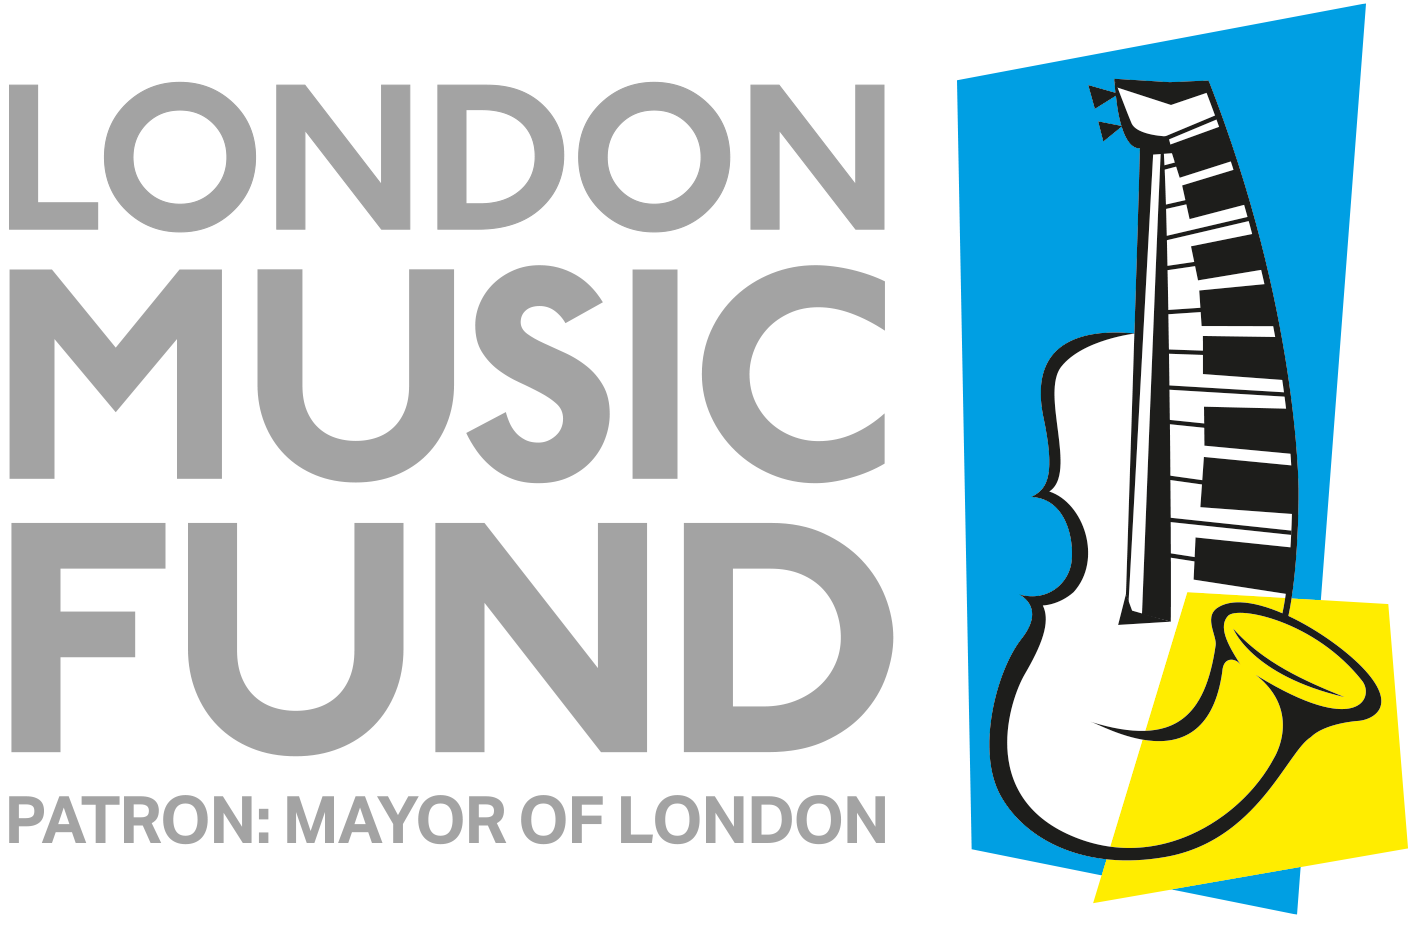 London Music Fund